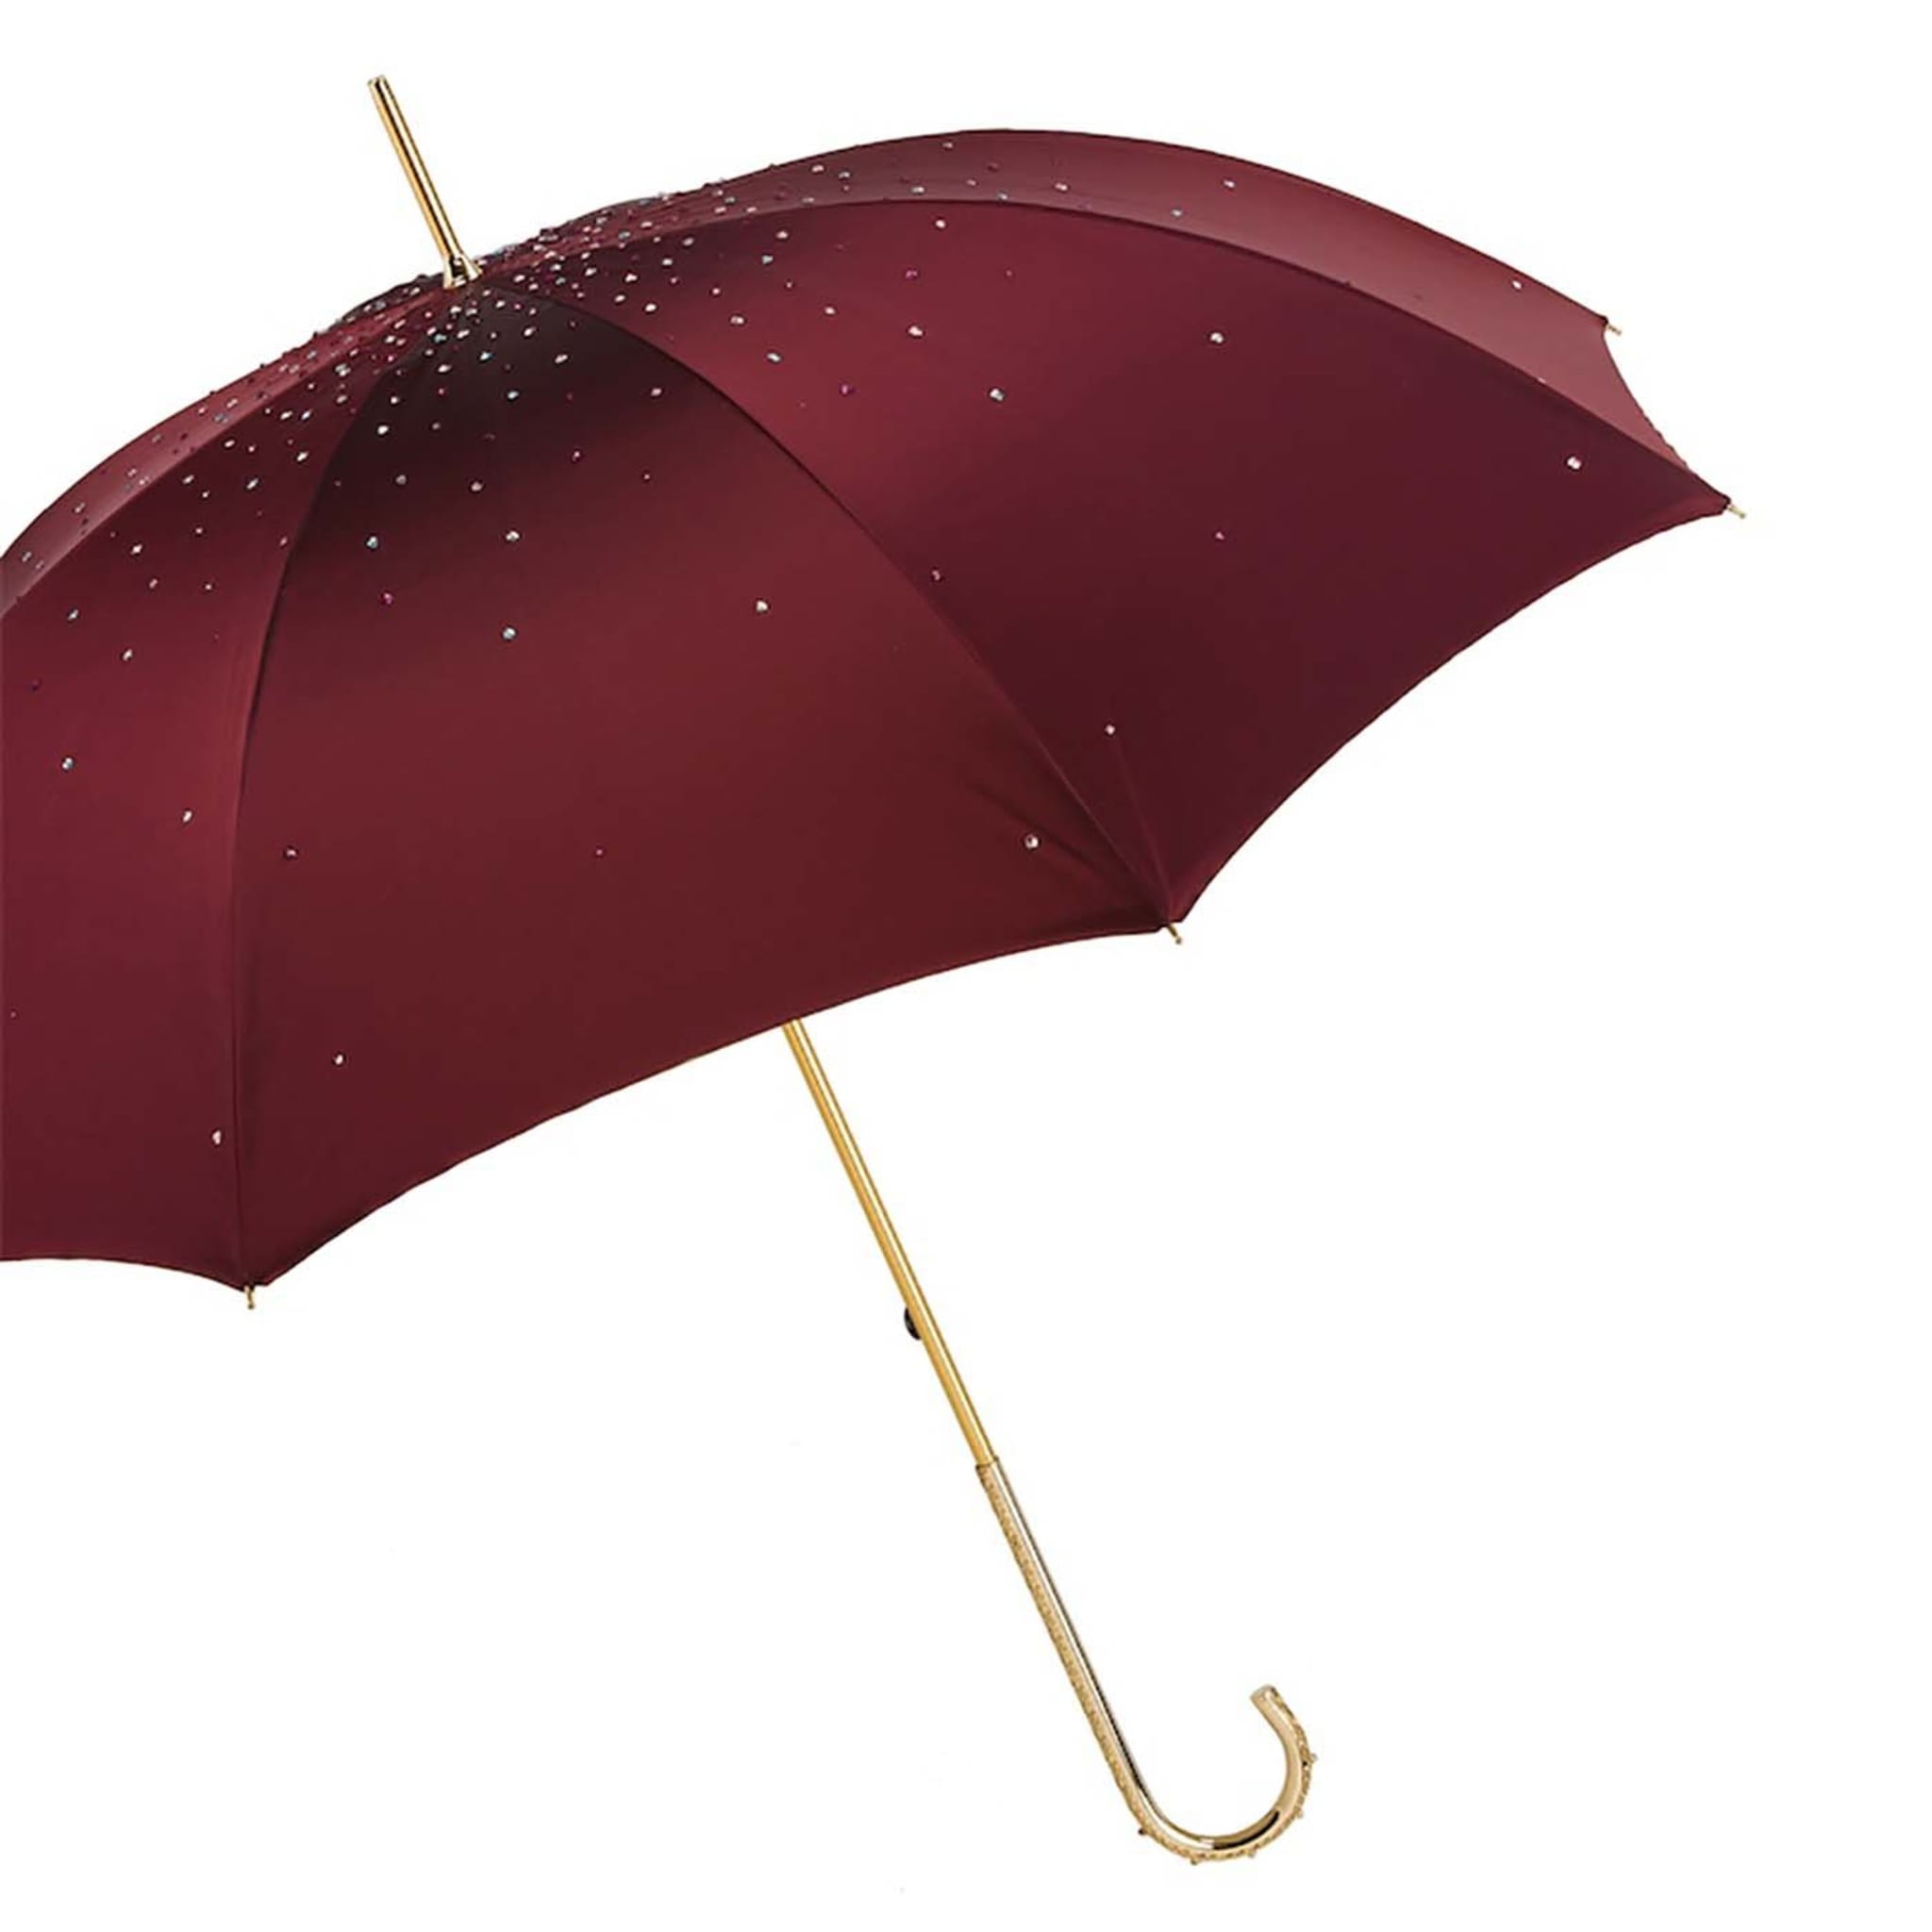 Burgundy and Brass Swarovski® Umbrella - Alternative view 1